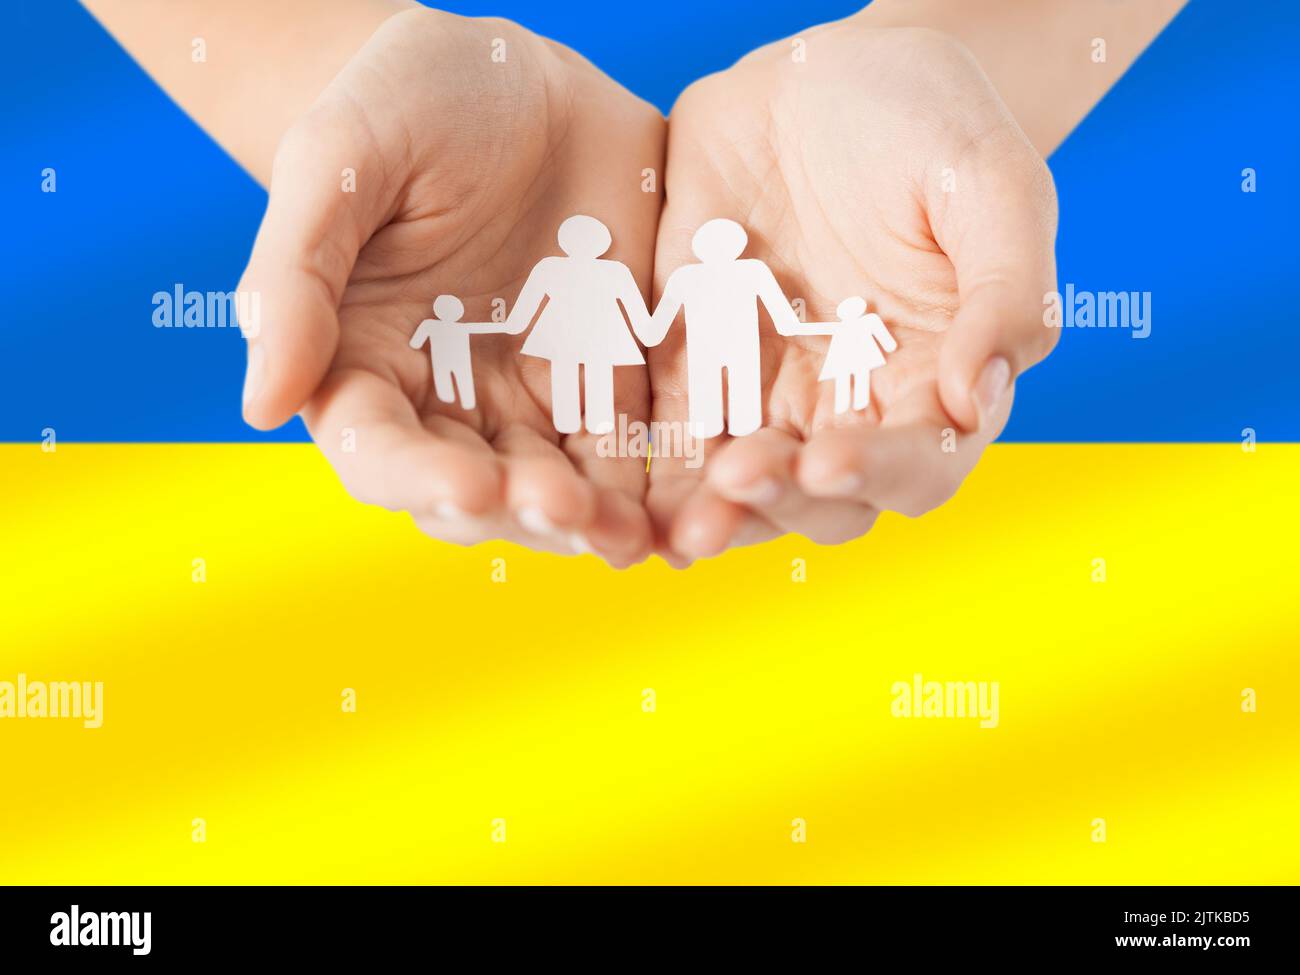 hands holding family icon over flag of ukraine Stock Photo